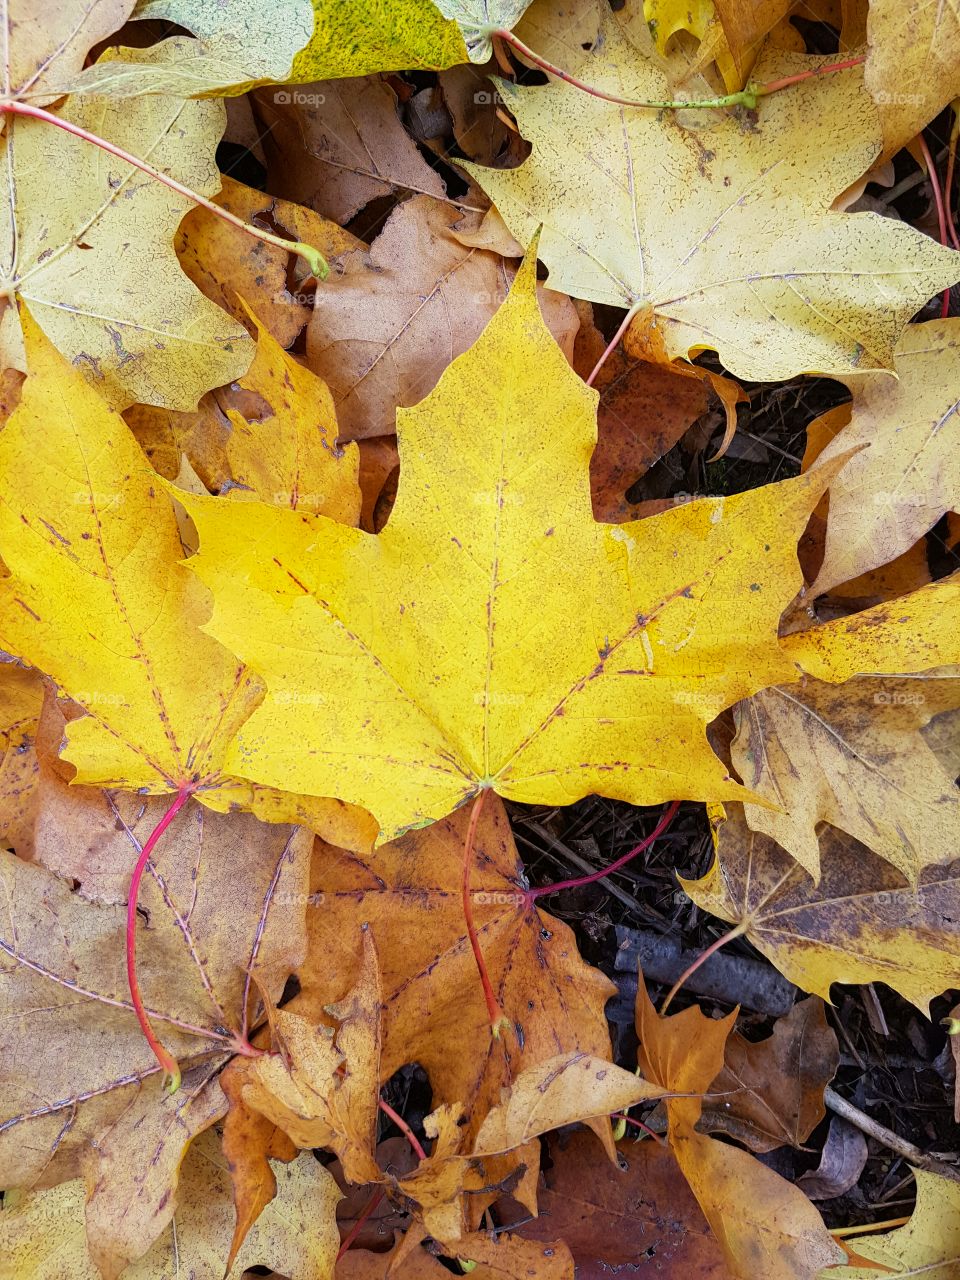 Yellow autumn leaf